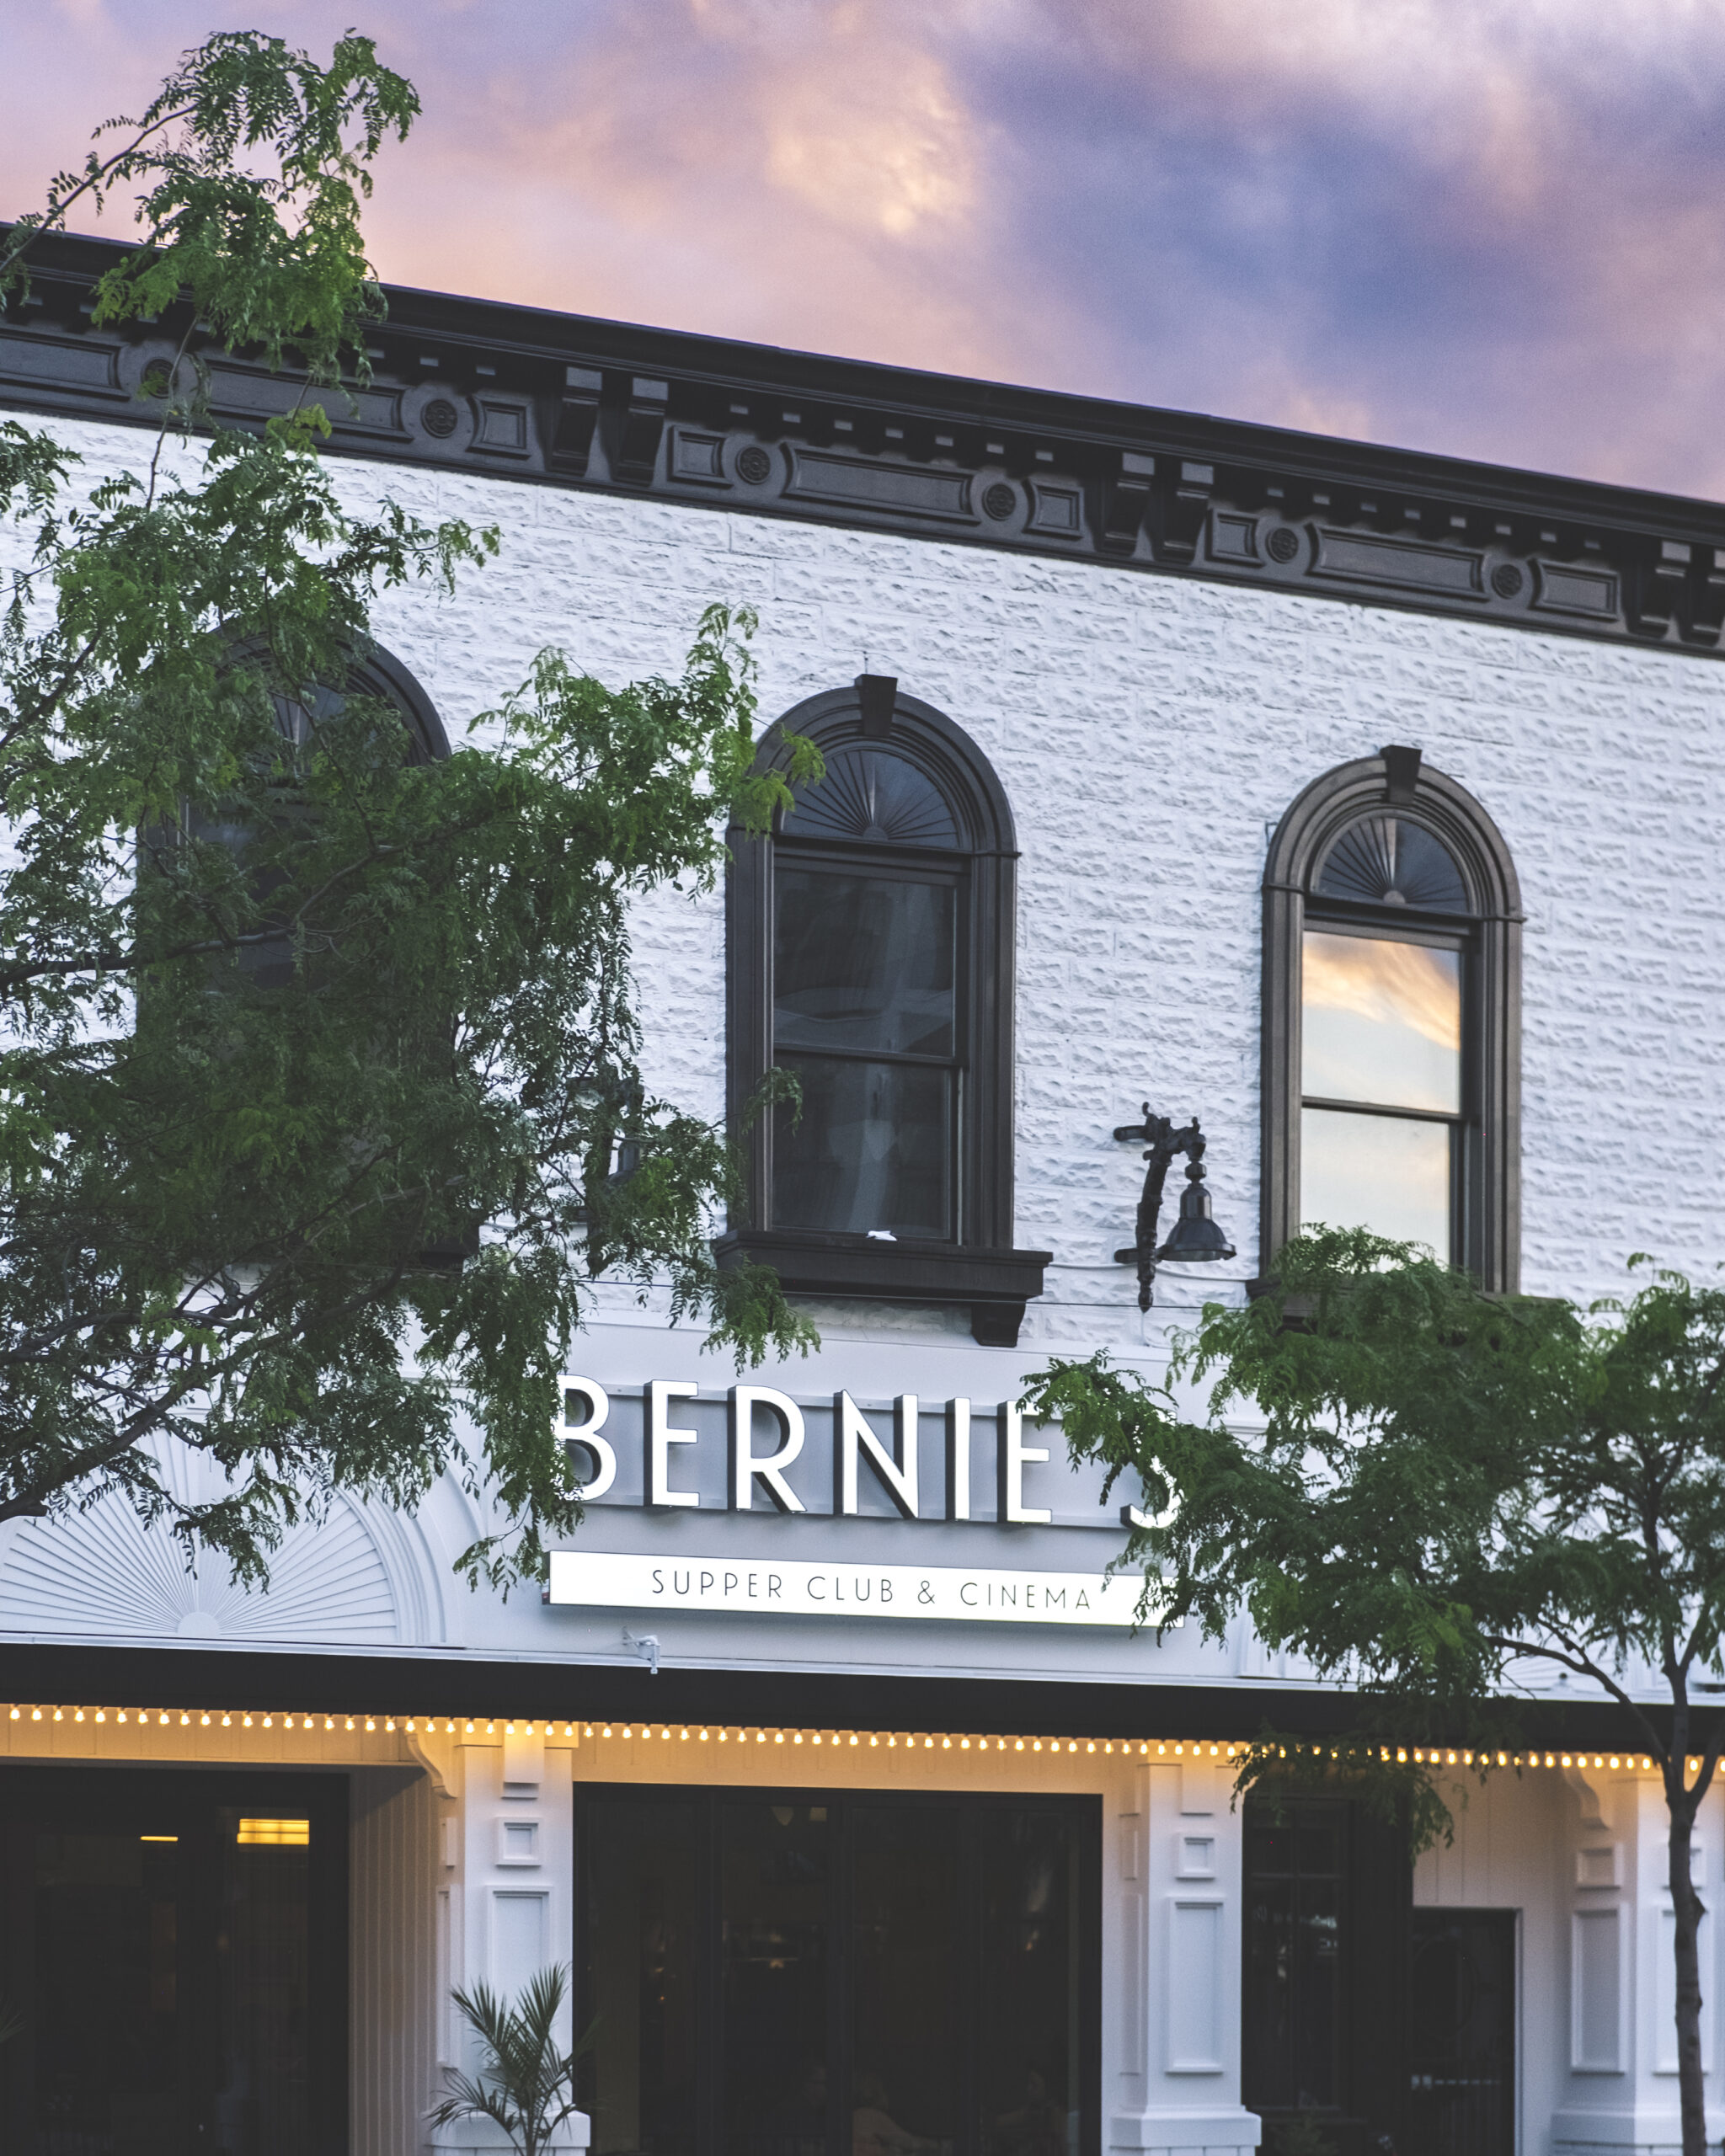 Bernie's Supper Club & Cinema, Kelowna BC